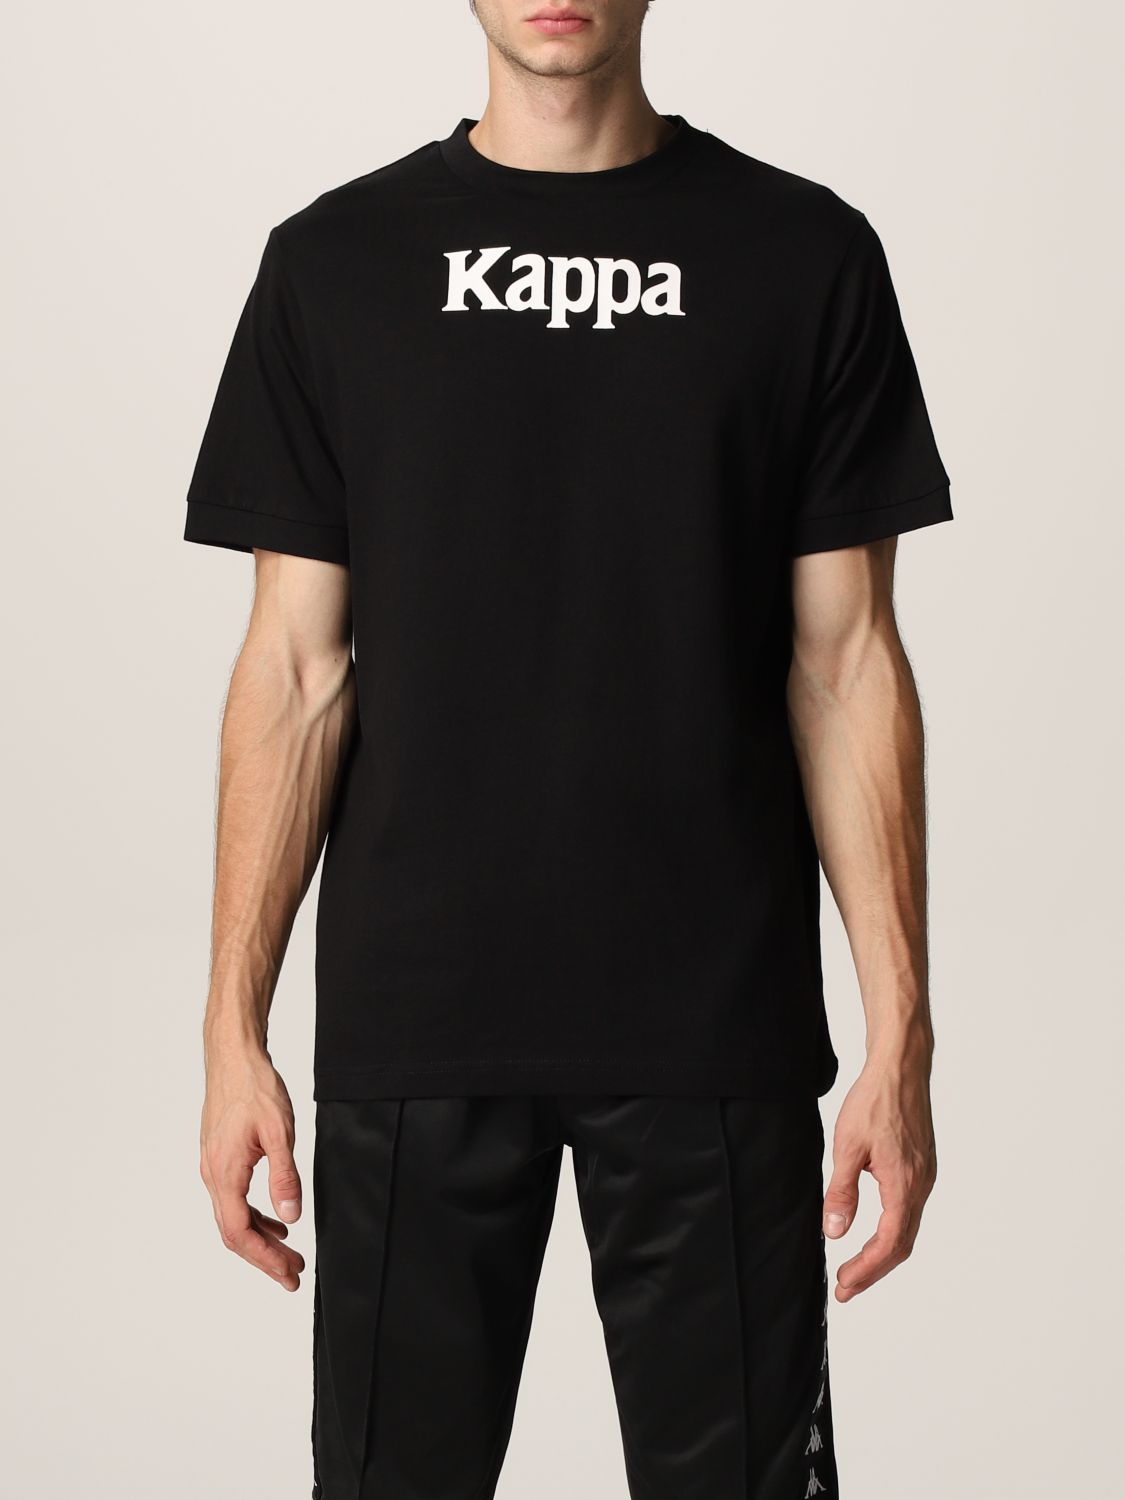 kappa t shirt